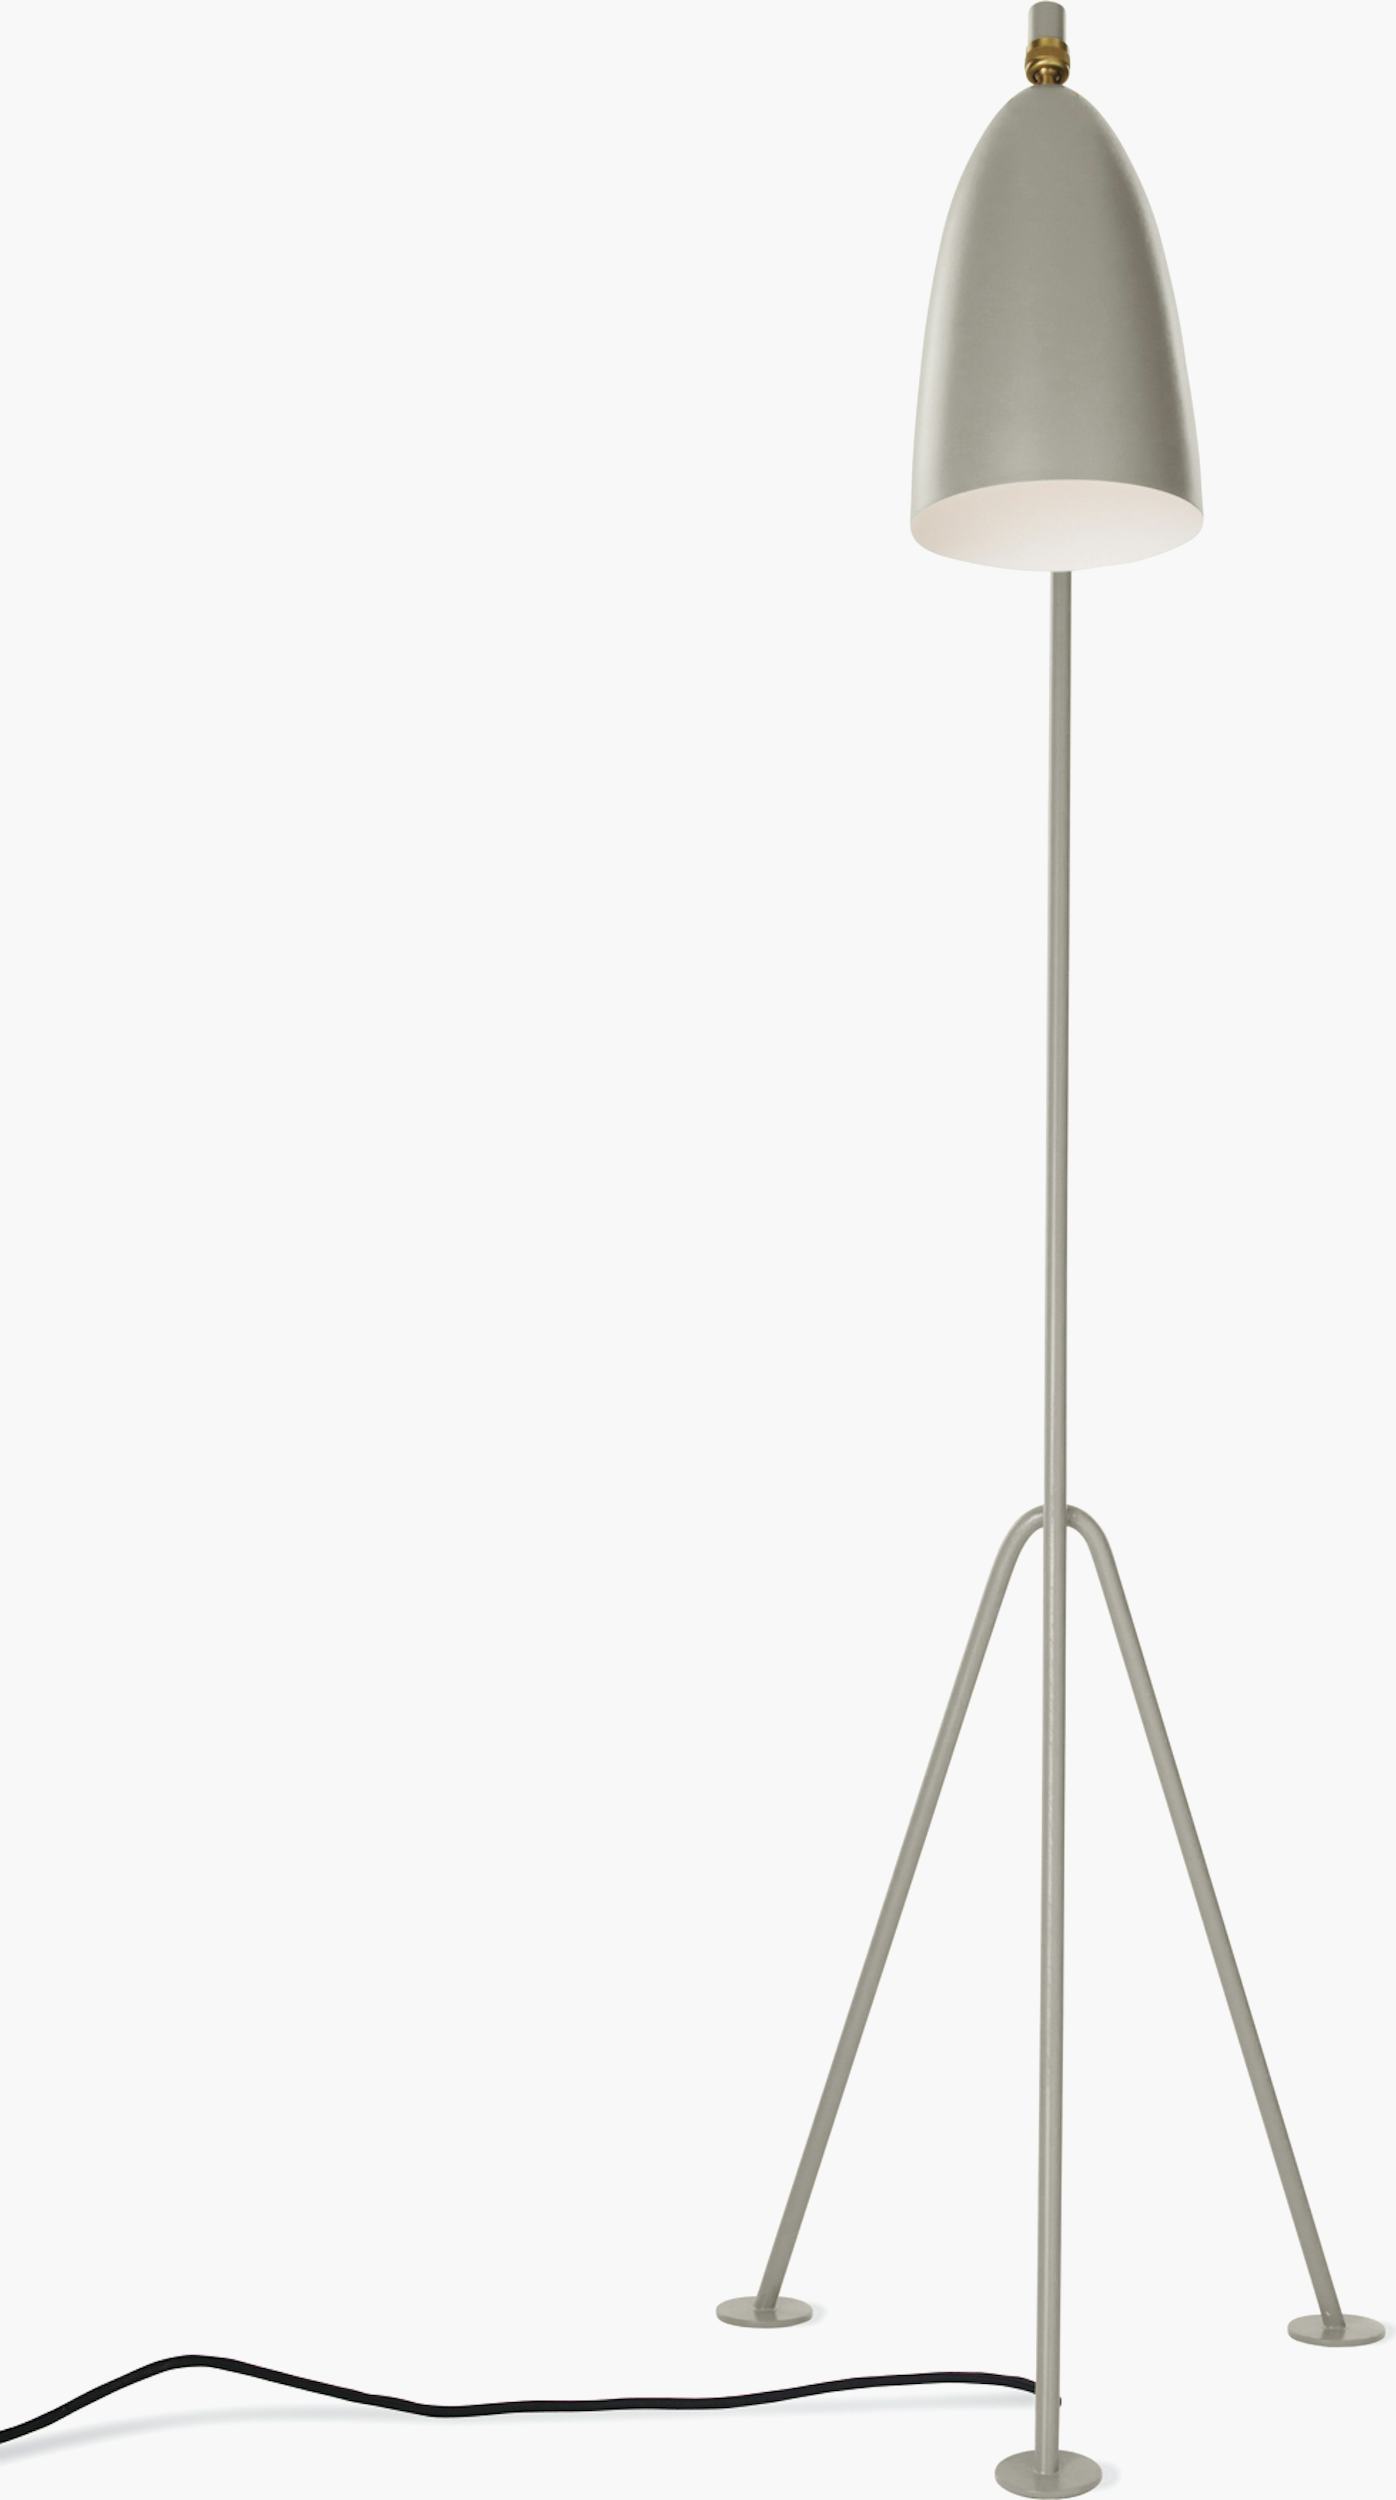 Greta Magnusson Grossman 'Grasshopper' Floor Lamp in Warm Gray